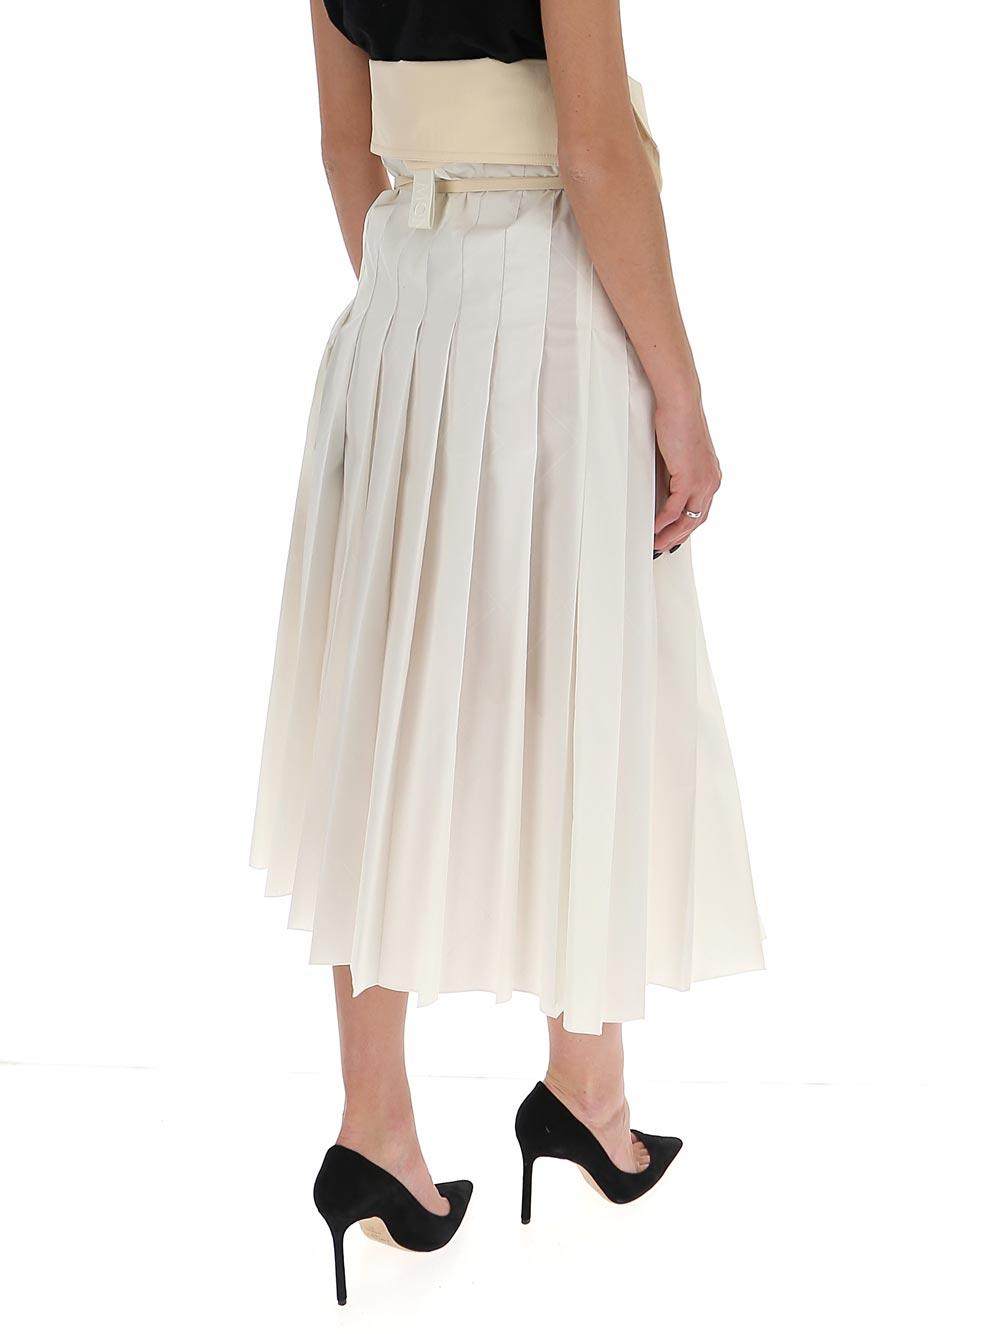 Moncler Genius Silk Moncler 1952 Pleated Midi Skirt in White - Lyst